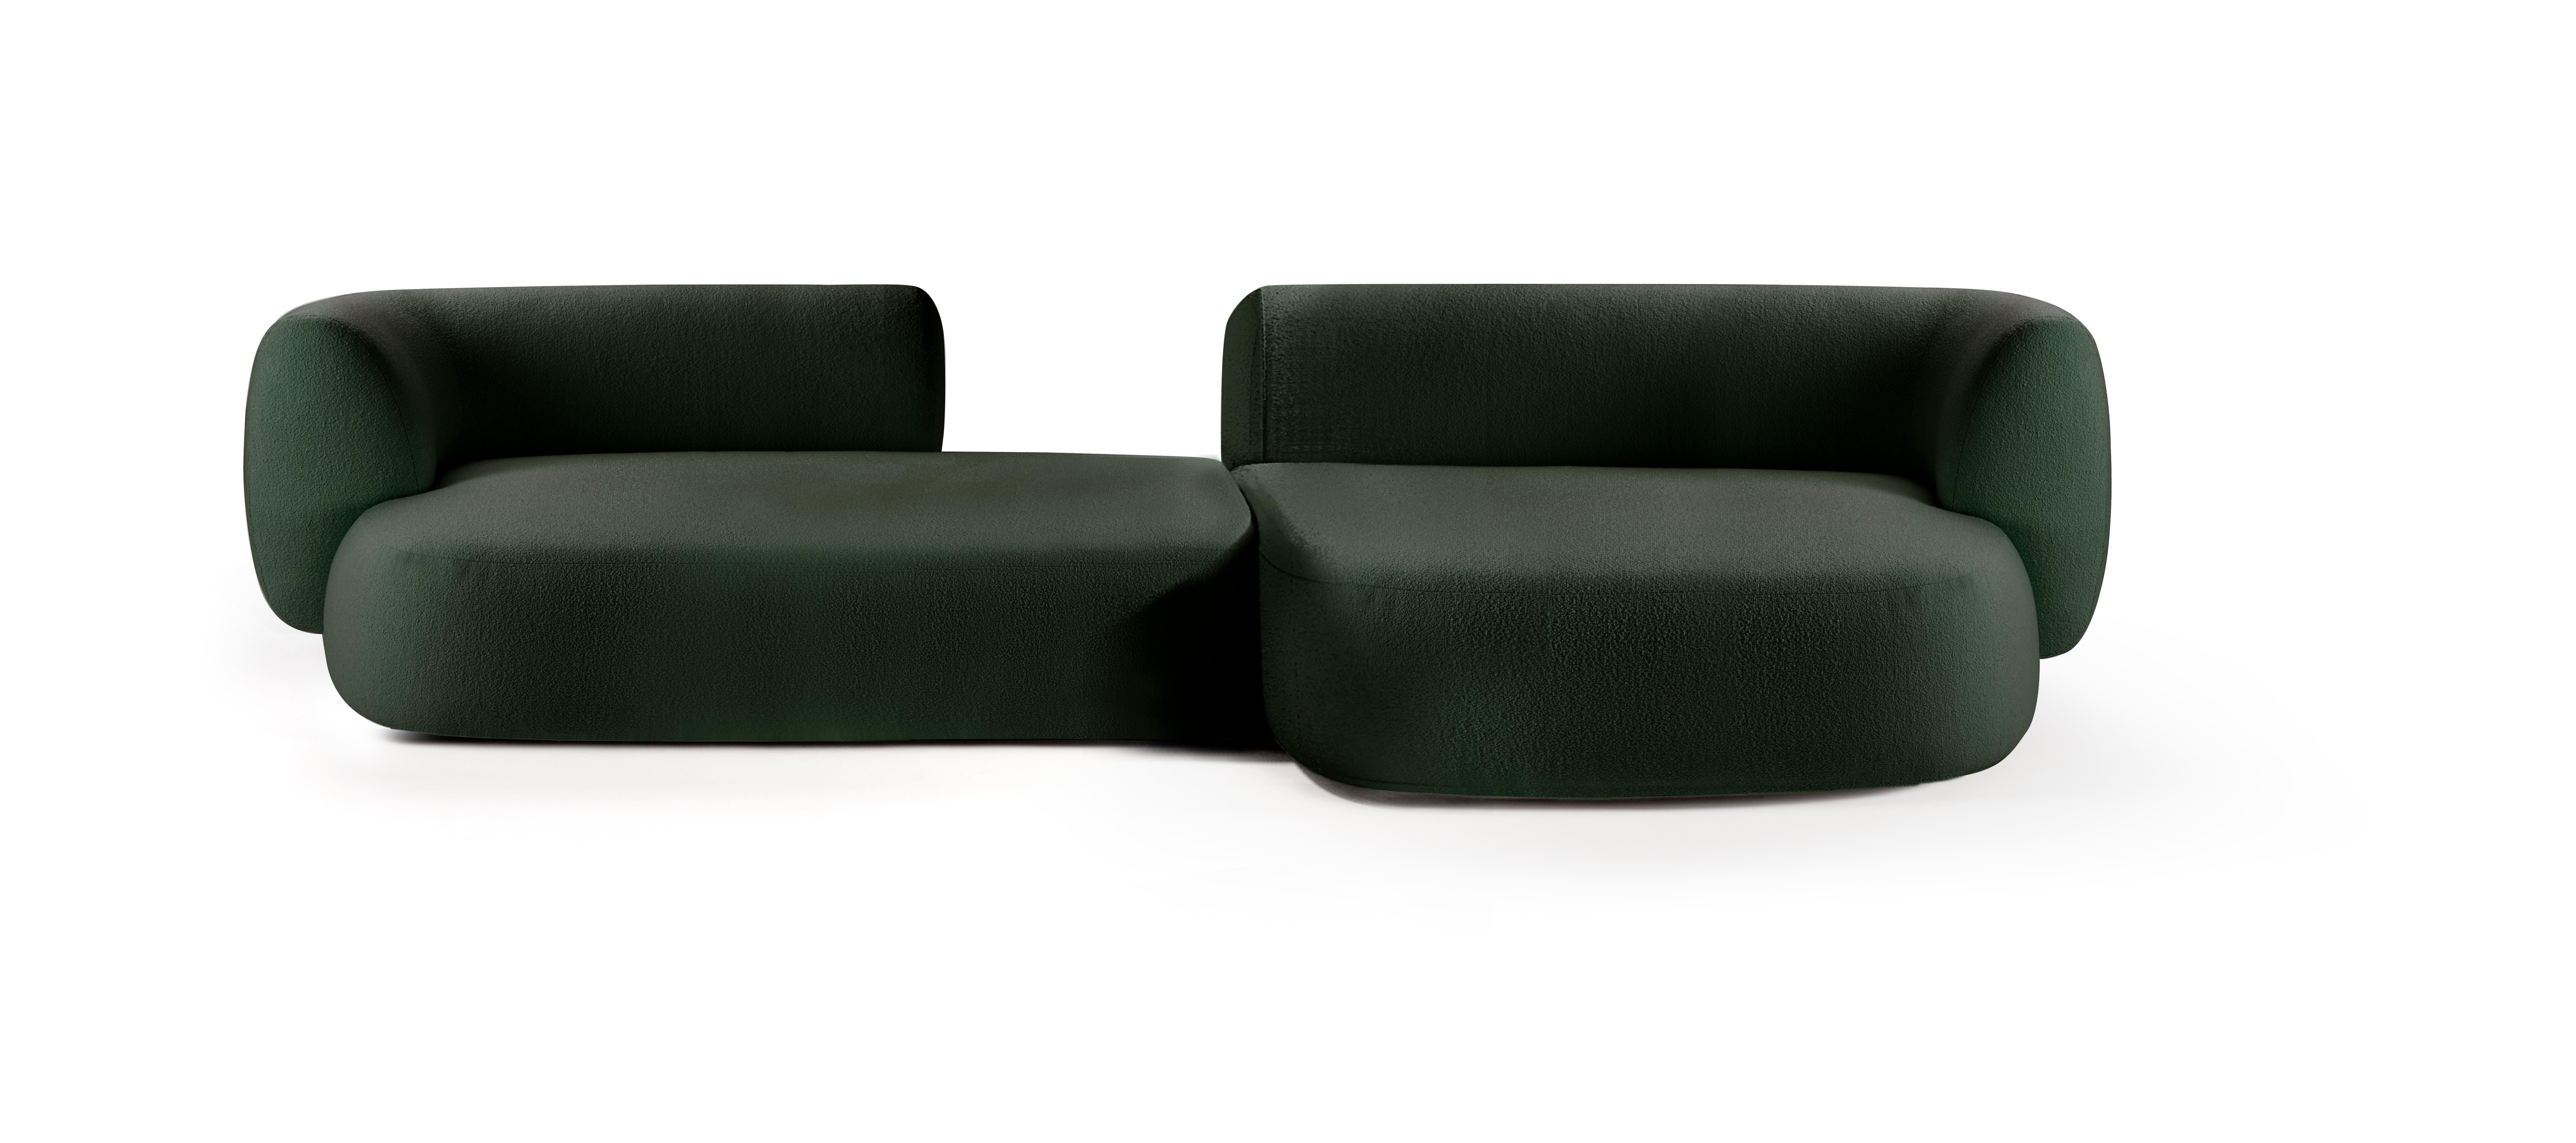 Hug modular sofa by Collector
Dimensions: W 330 x D 160 x H 74 cm.
DX terminal element gap module: W 180 x D 98 cm x H 74.
Chaise Longue XL module: W 150 x D 160 x H 74 cm.
Materials: fabric, solid oak wood.

This sofa is composed of one DX